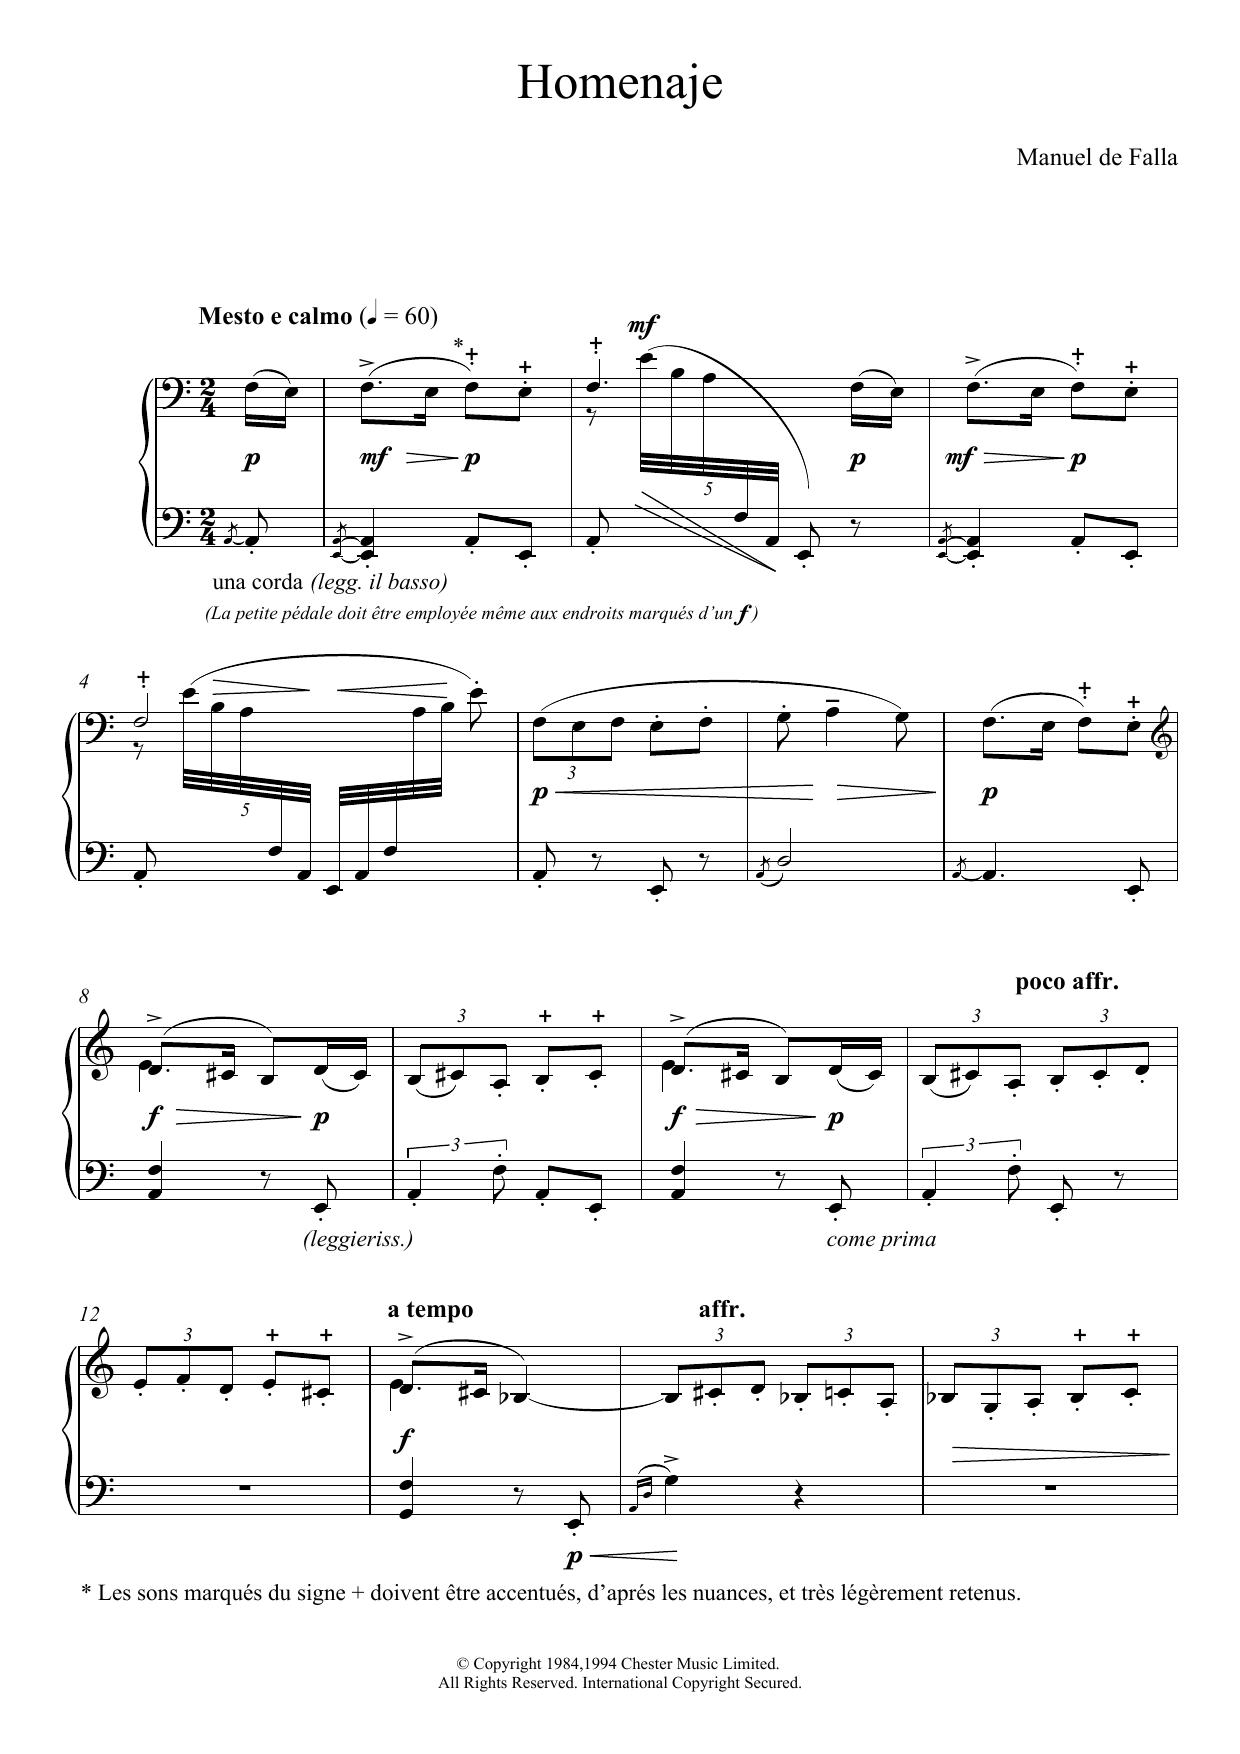 Manuel De Falla Homenaje Sheet Music Notes & Chords for Piano - Download or Print PDF